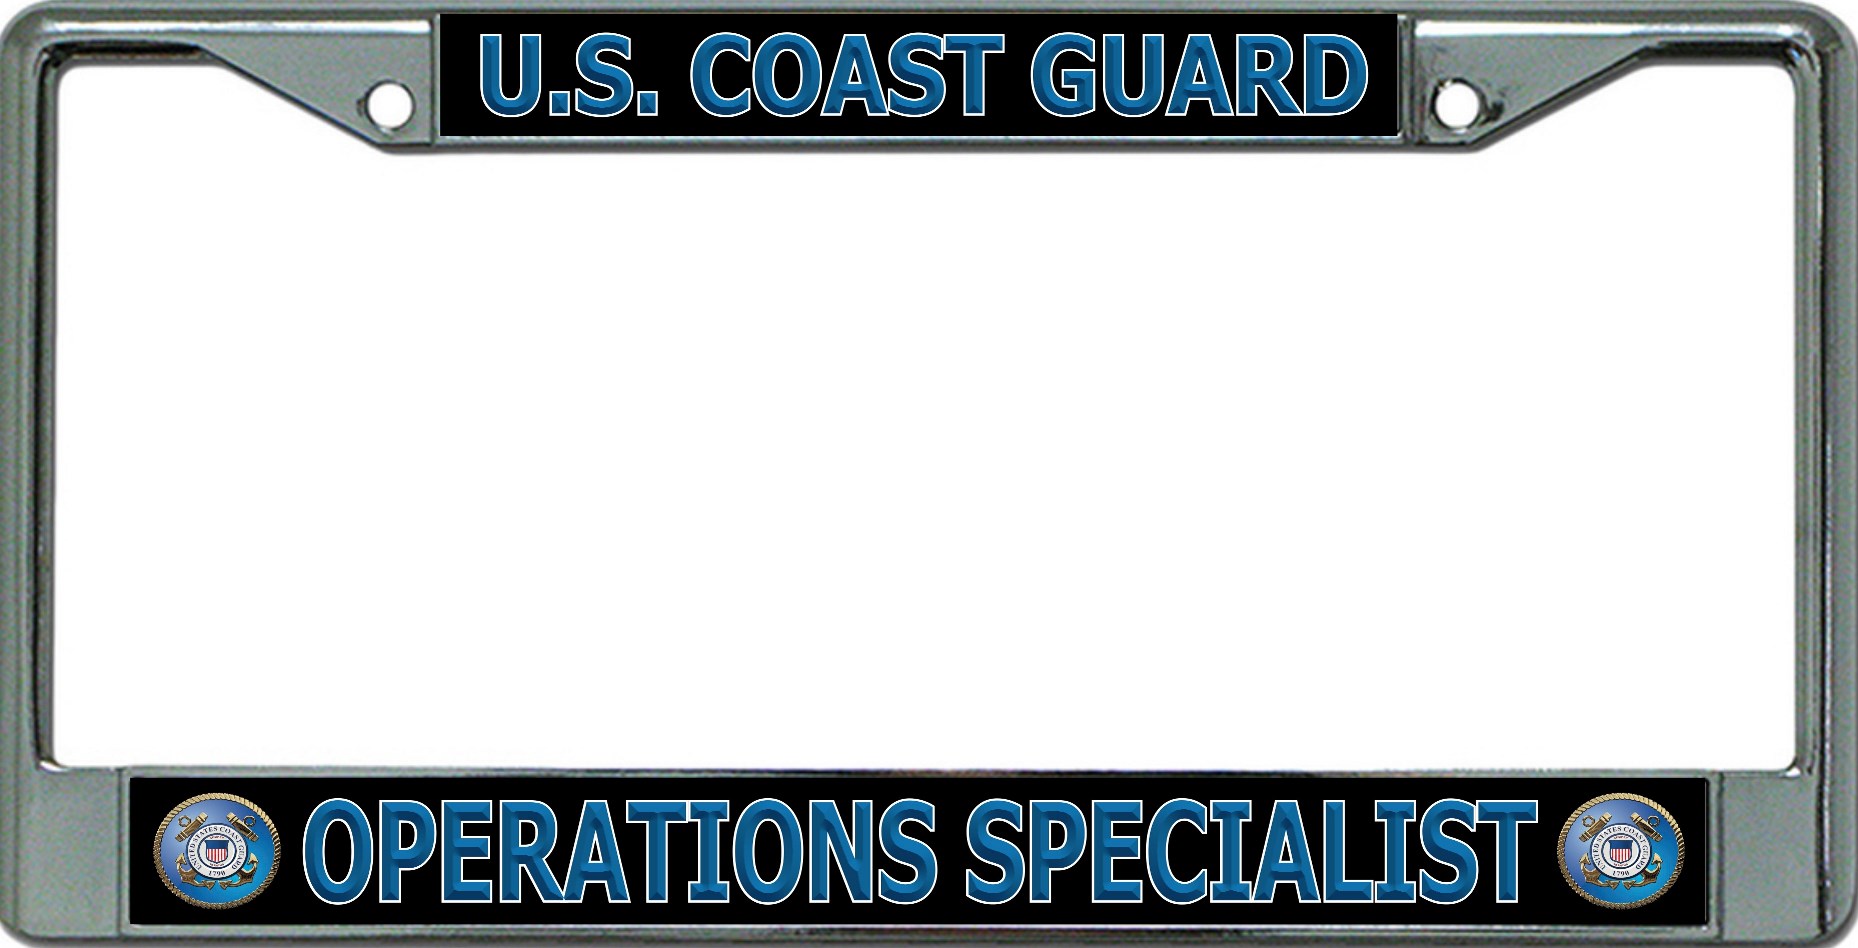 U.S. Coast Guard Operations Specialist Chrome License Plate FRAME